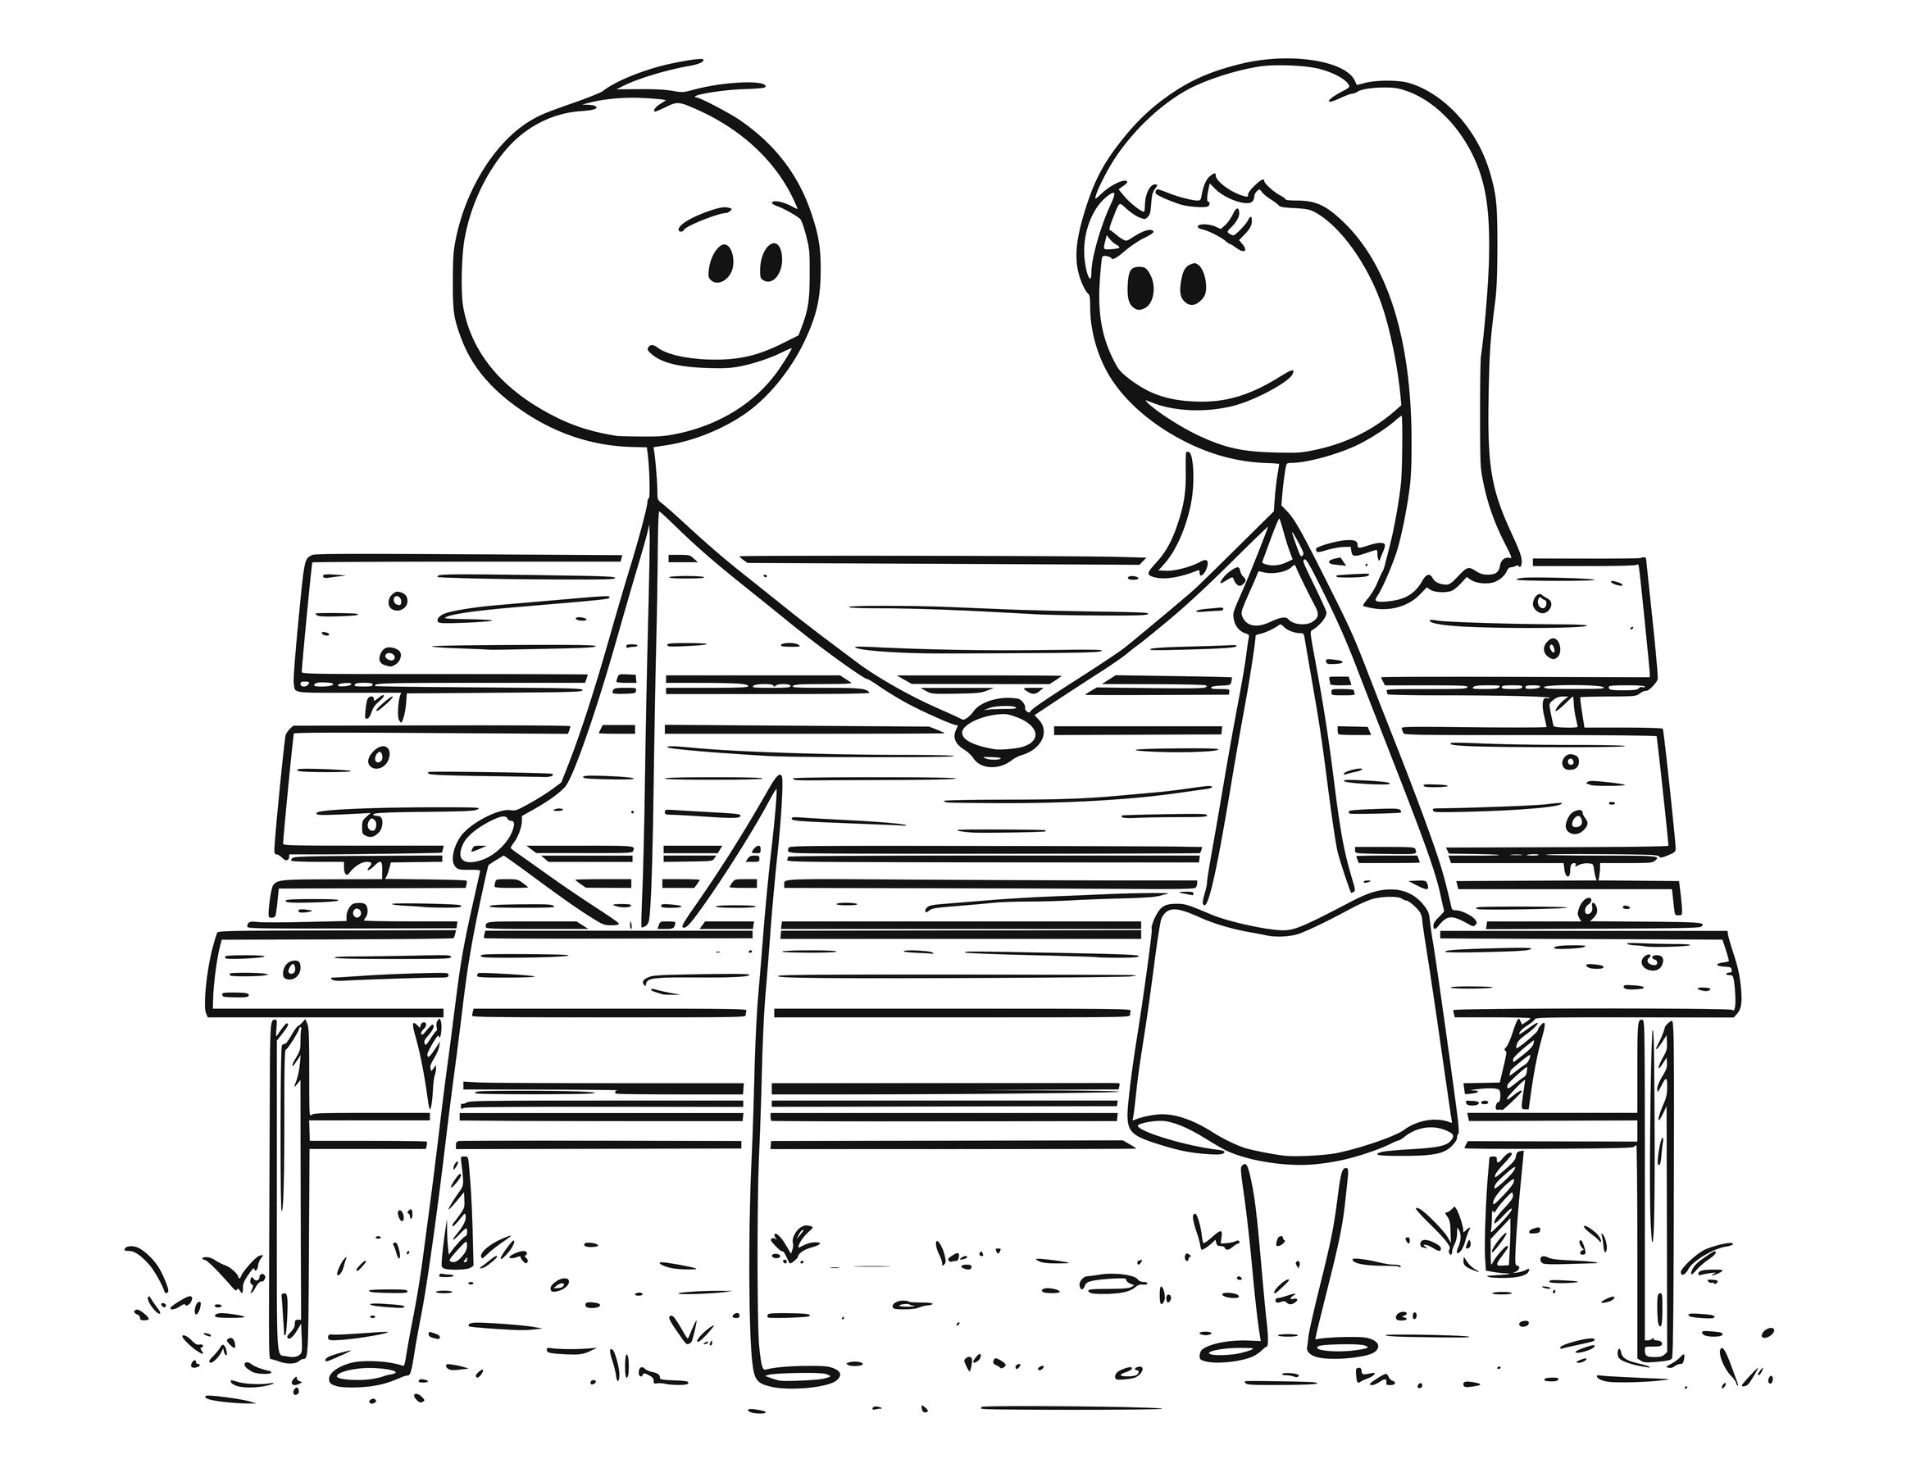 Pamela & Michael sat on a bench holding hands